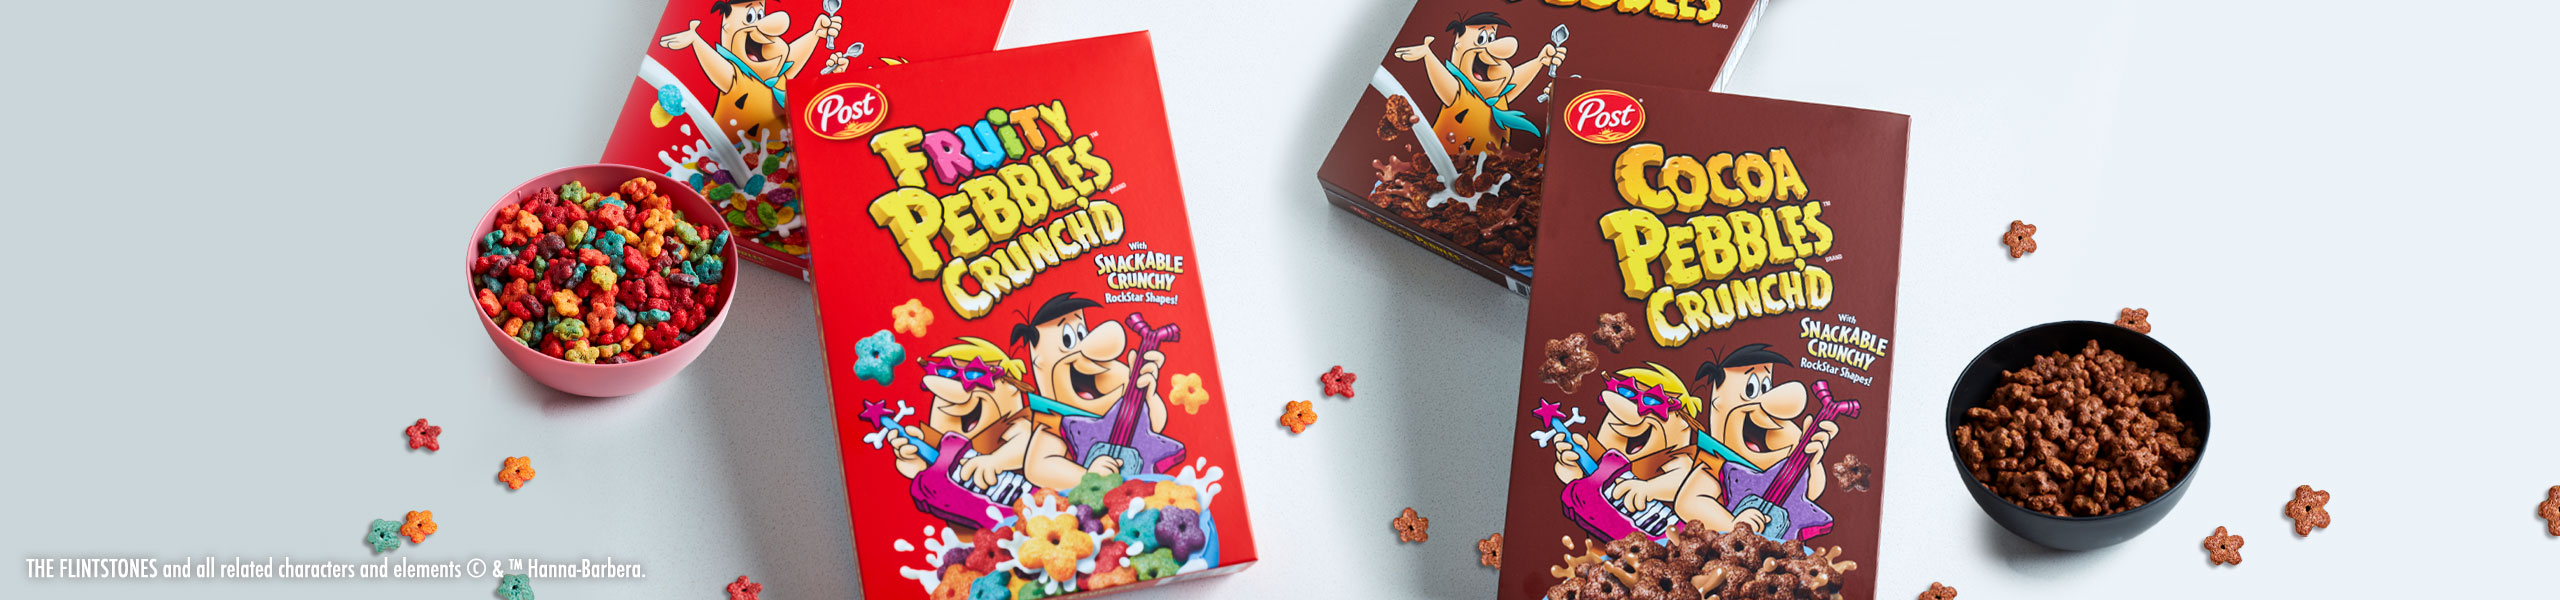 PEBBLES Crunch'd Cereal Boxes